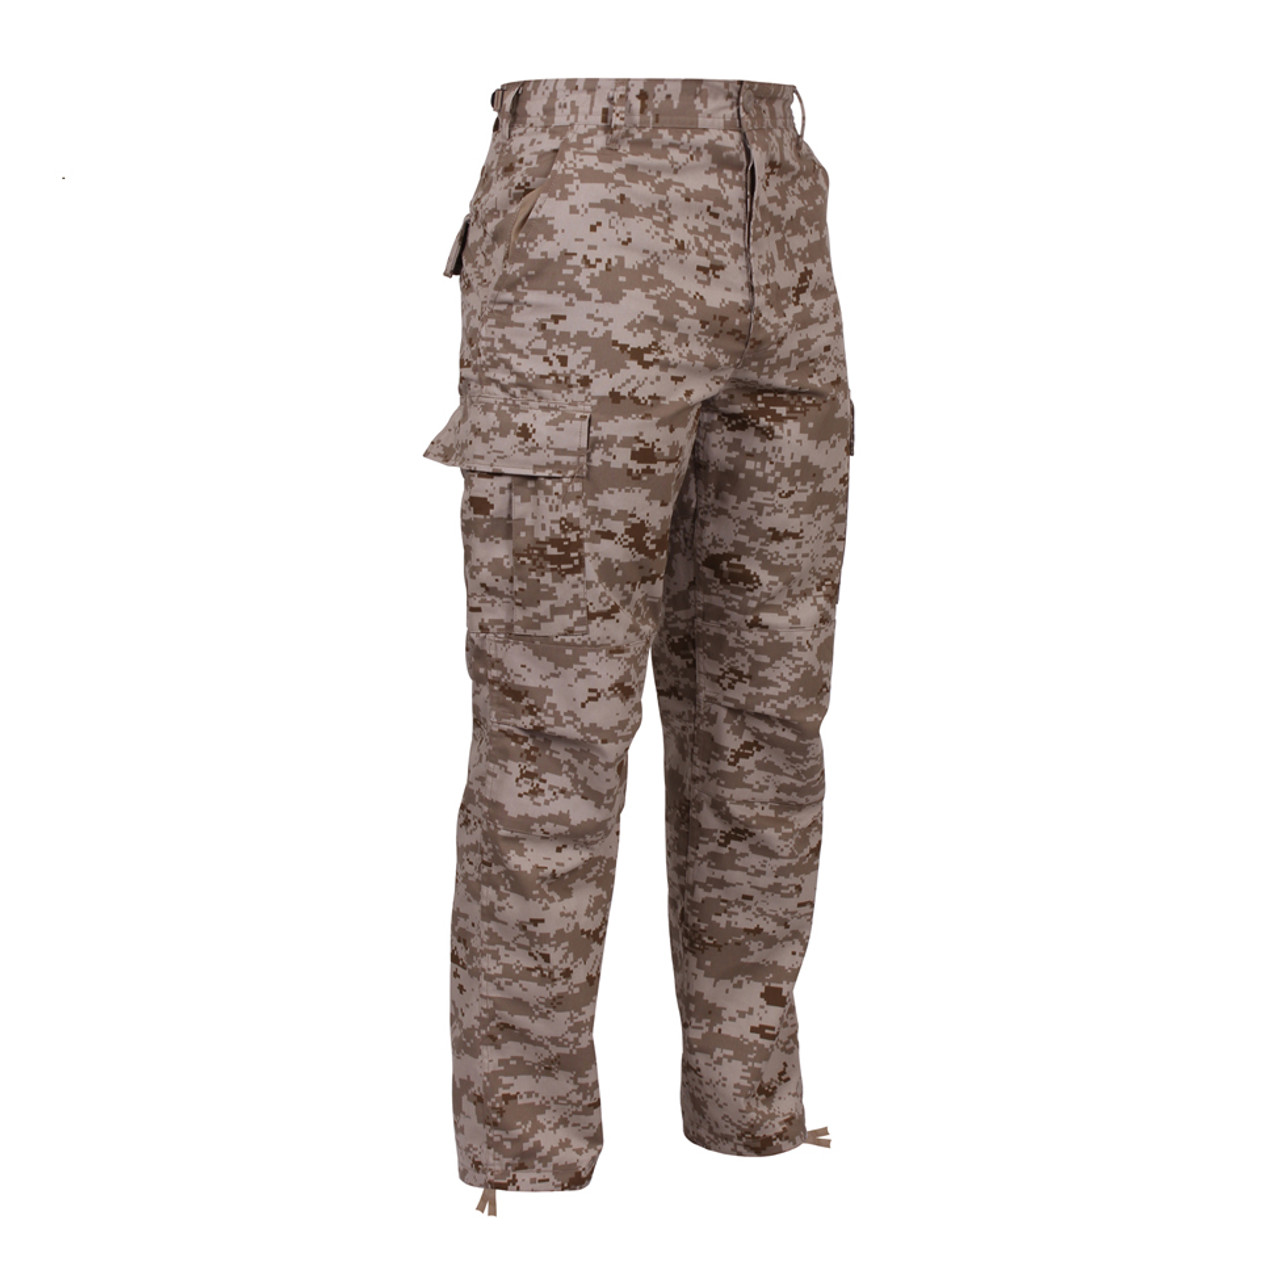 Subdued Urban Camo Cargo Pants BDU Military City Paintball USMC